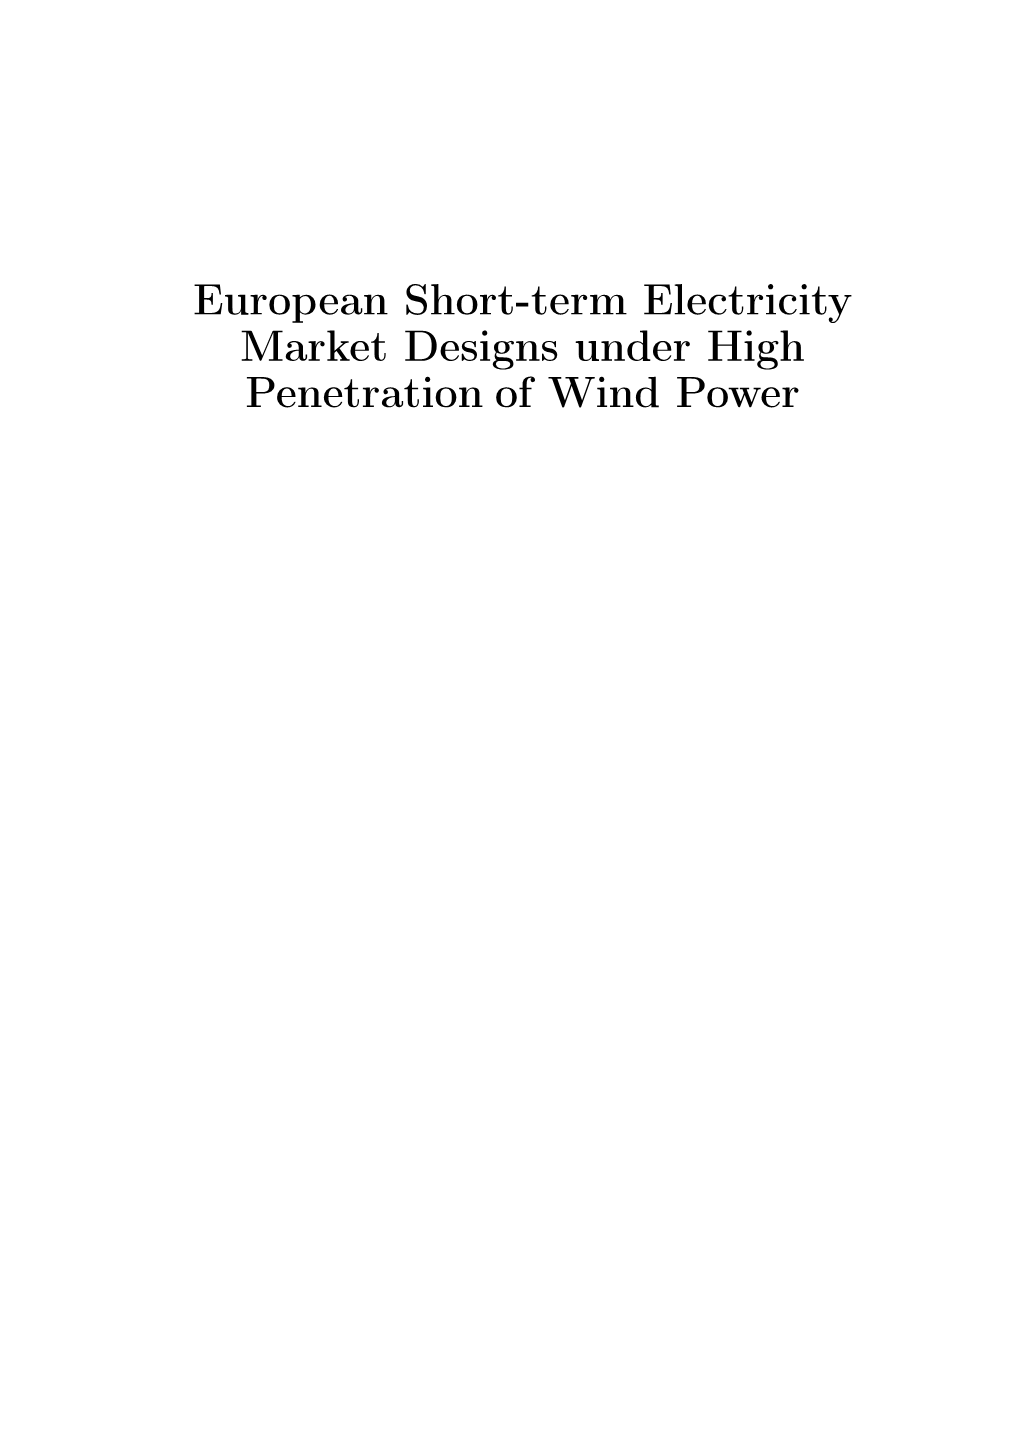 European Short-Term Electricity Market Designs Under High Penetration of Wind Power